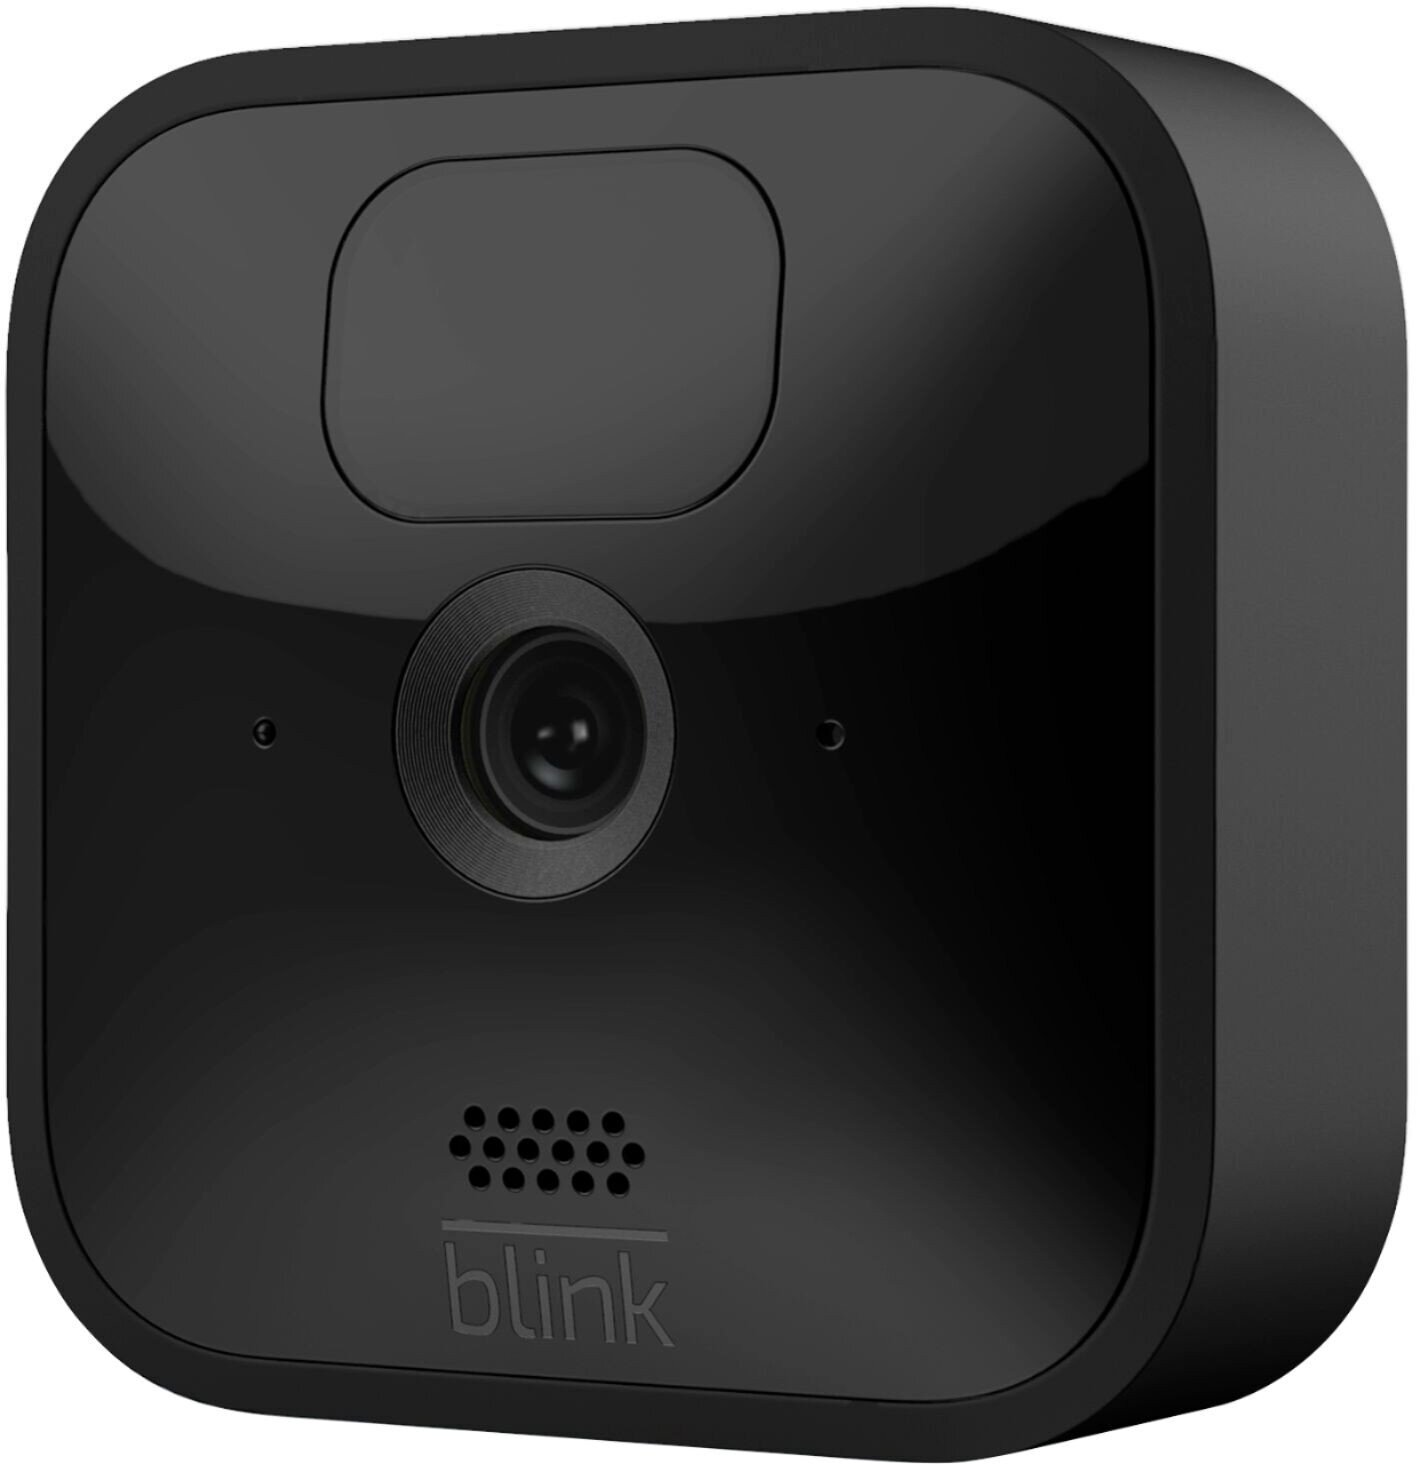 Buy Blink Outdoor (3rd Gen) Wireless Security Camera online Worldwide ...